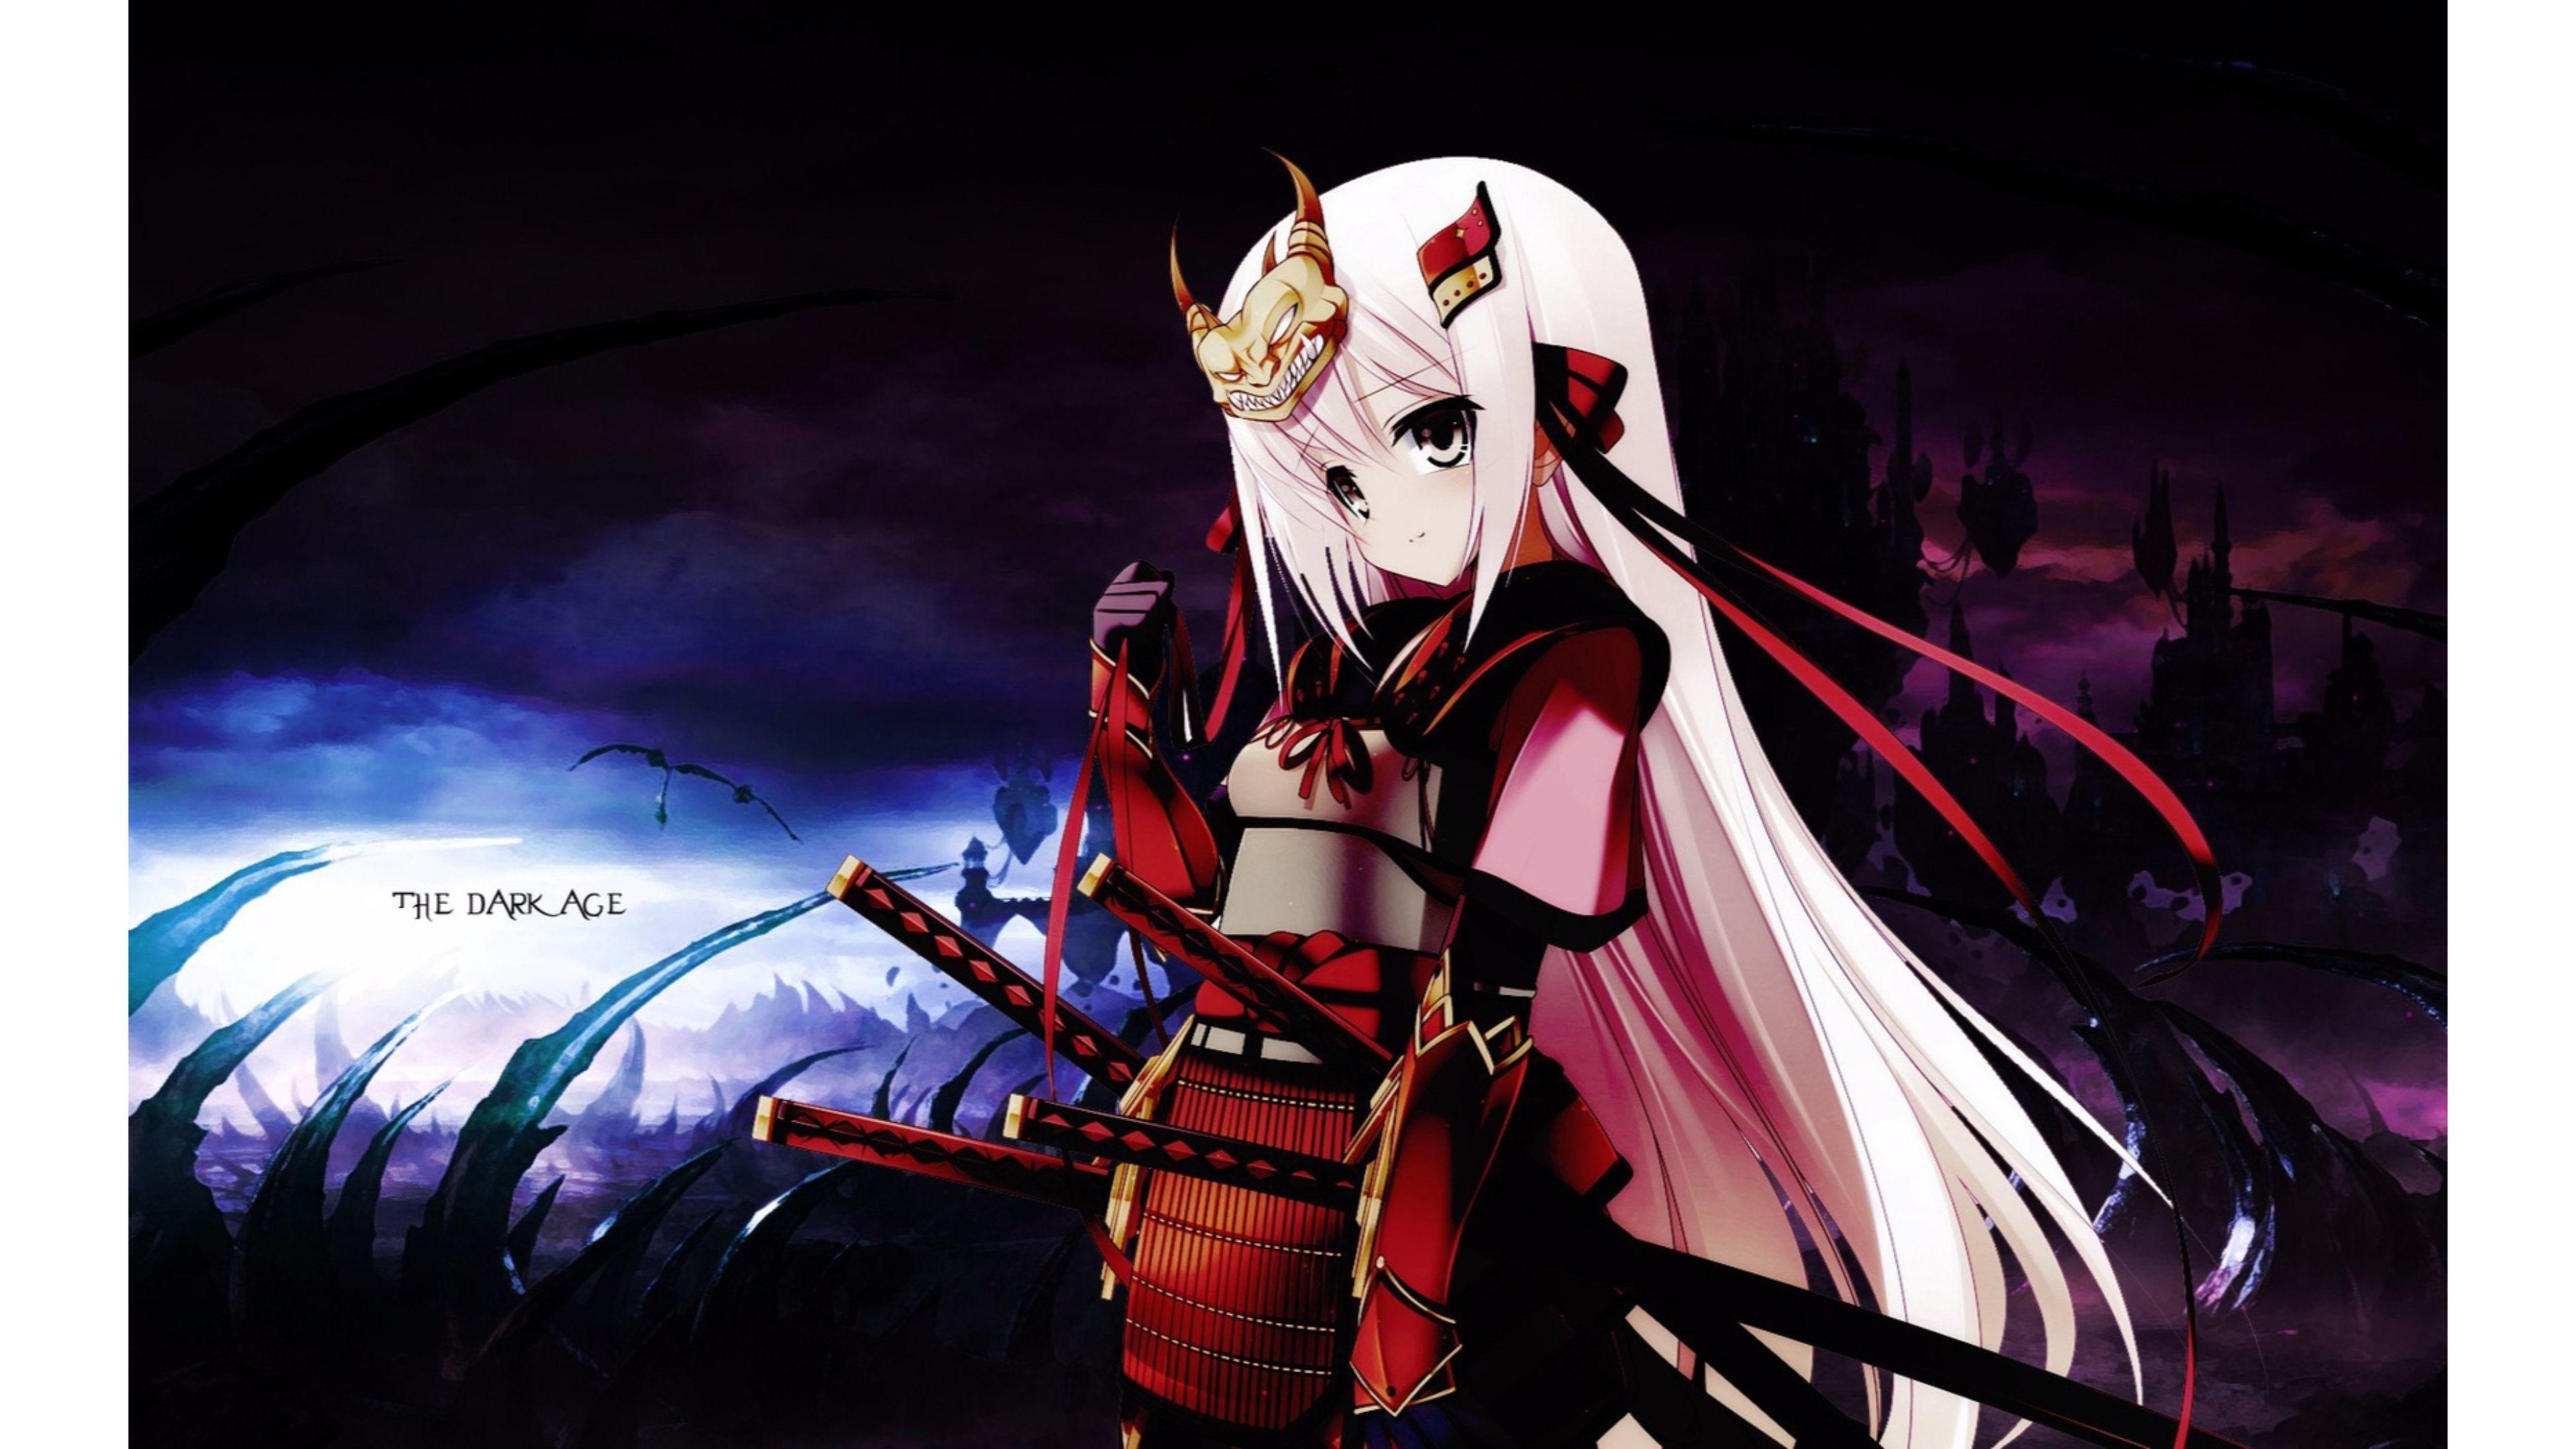 Dangerous girl  Other  Anime Background Wallpapers on Desktop Nexus  Image 1460194